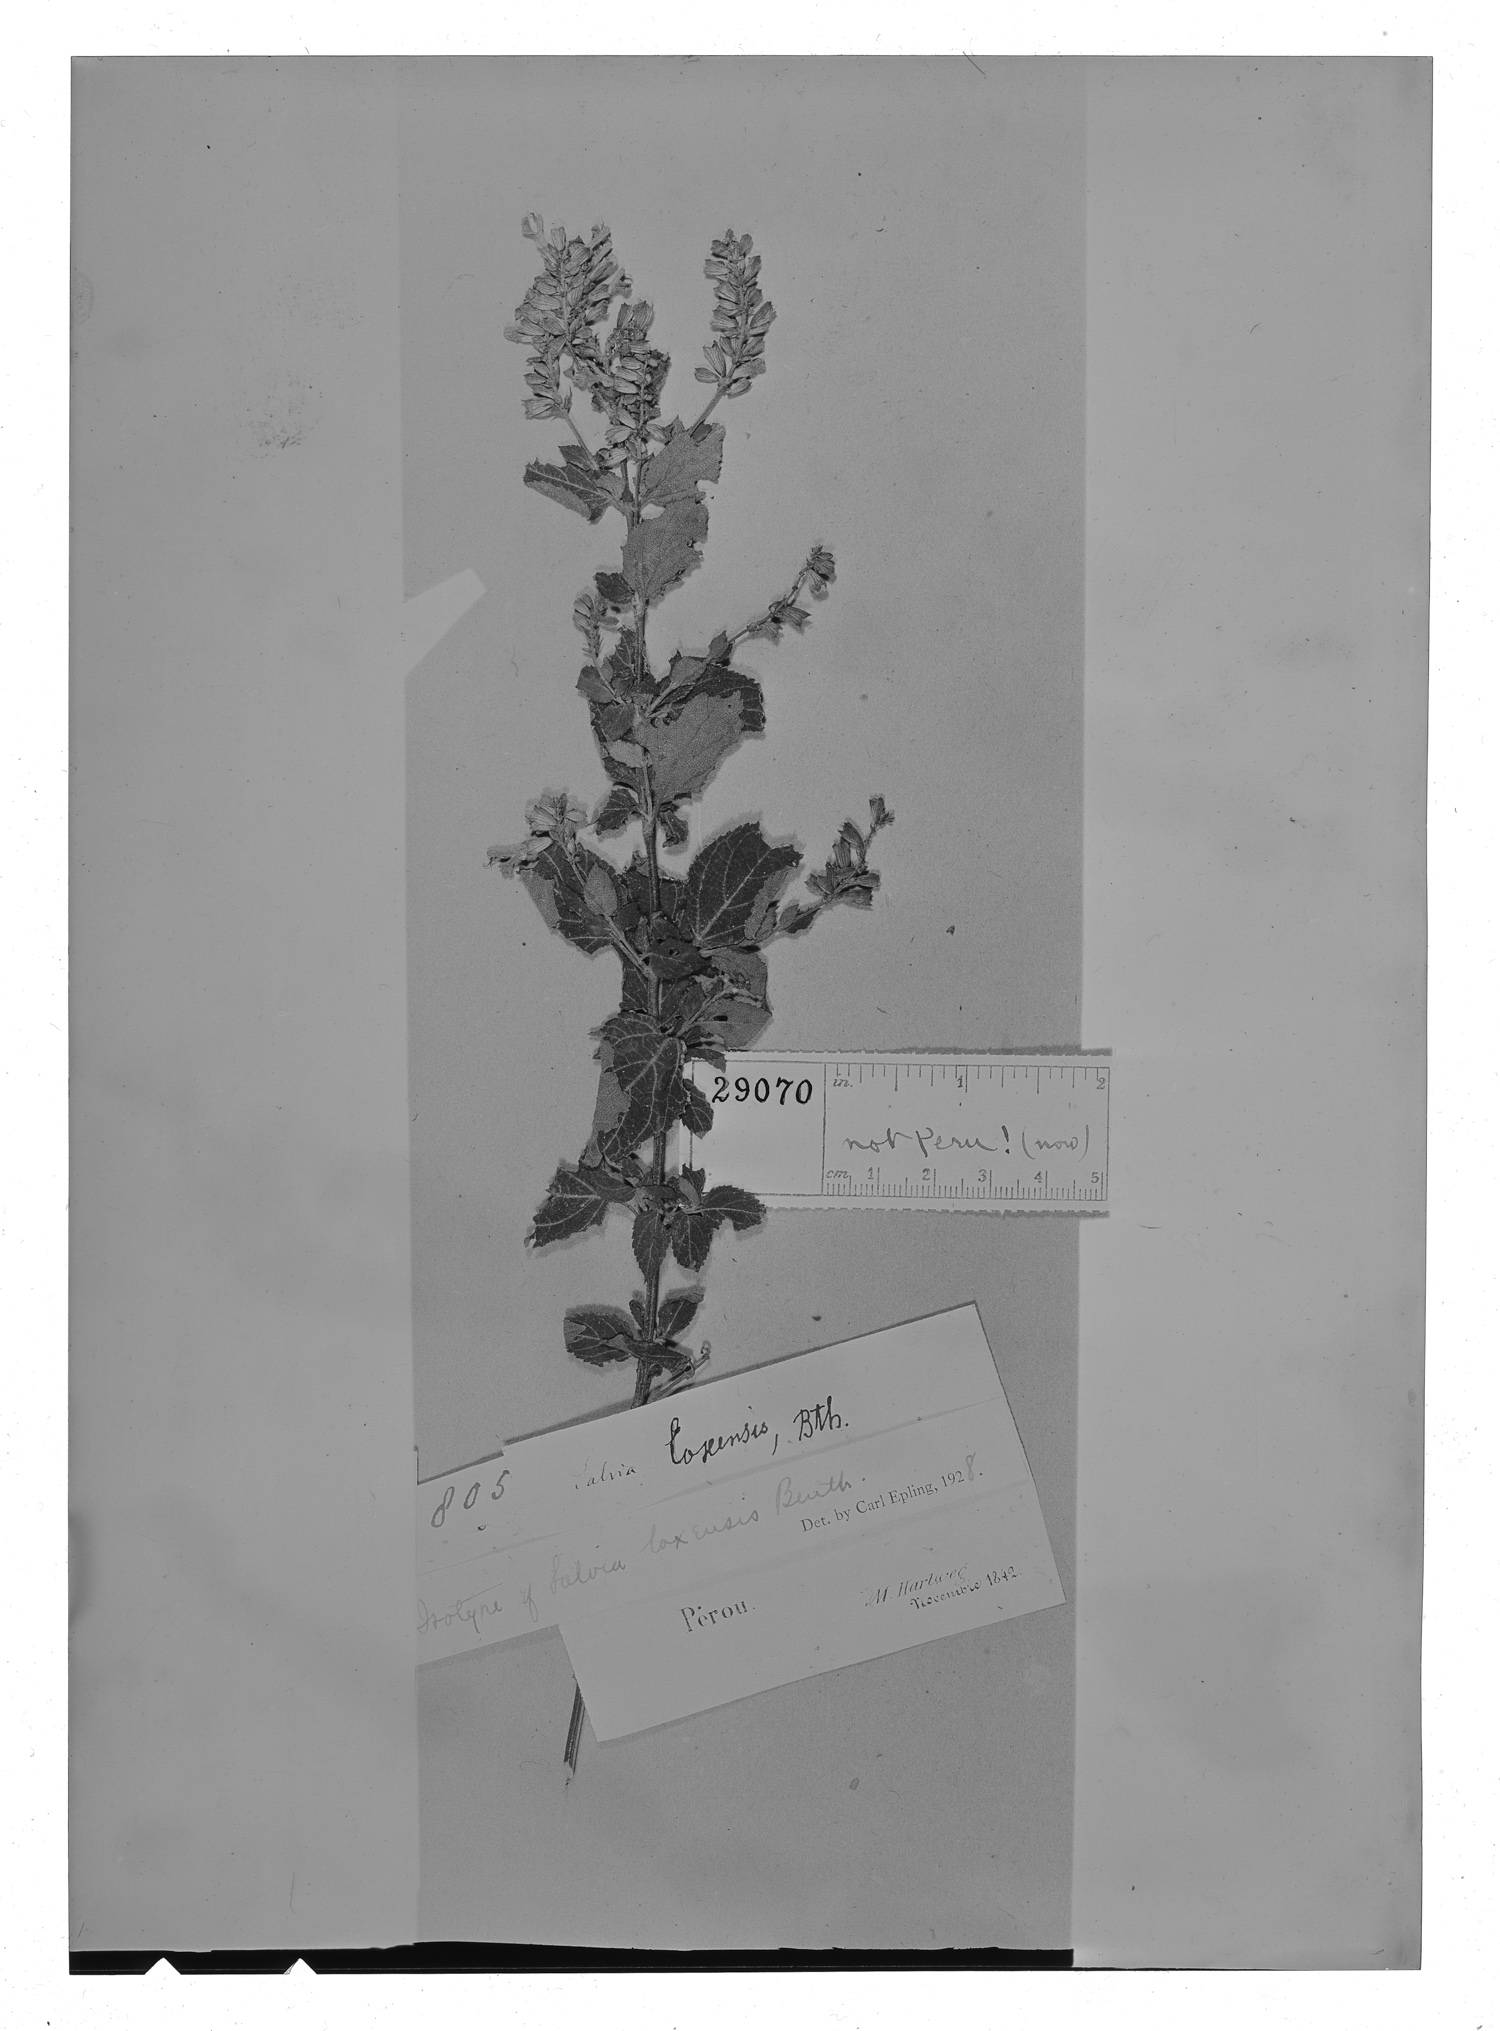 Salvia loxensis image